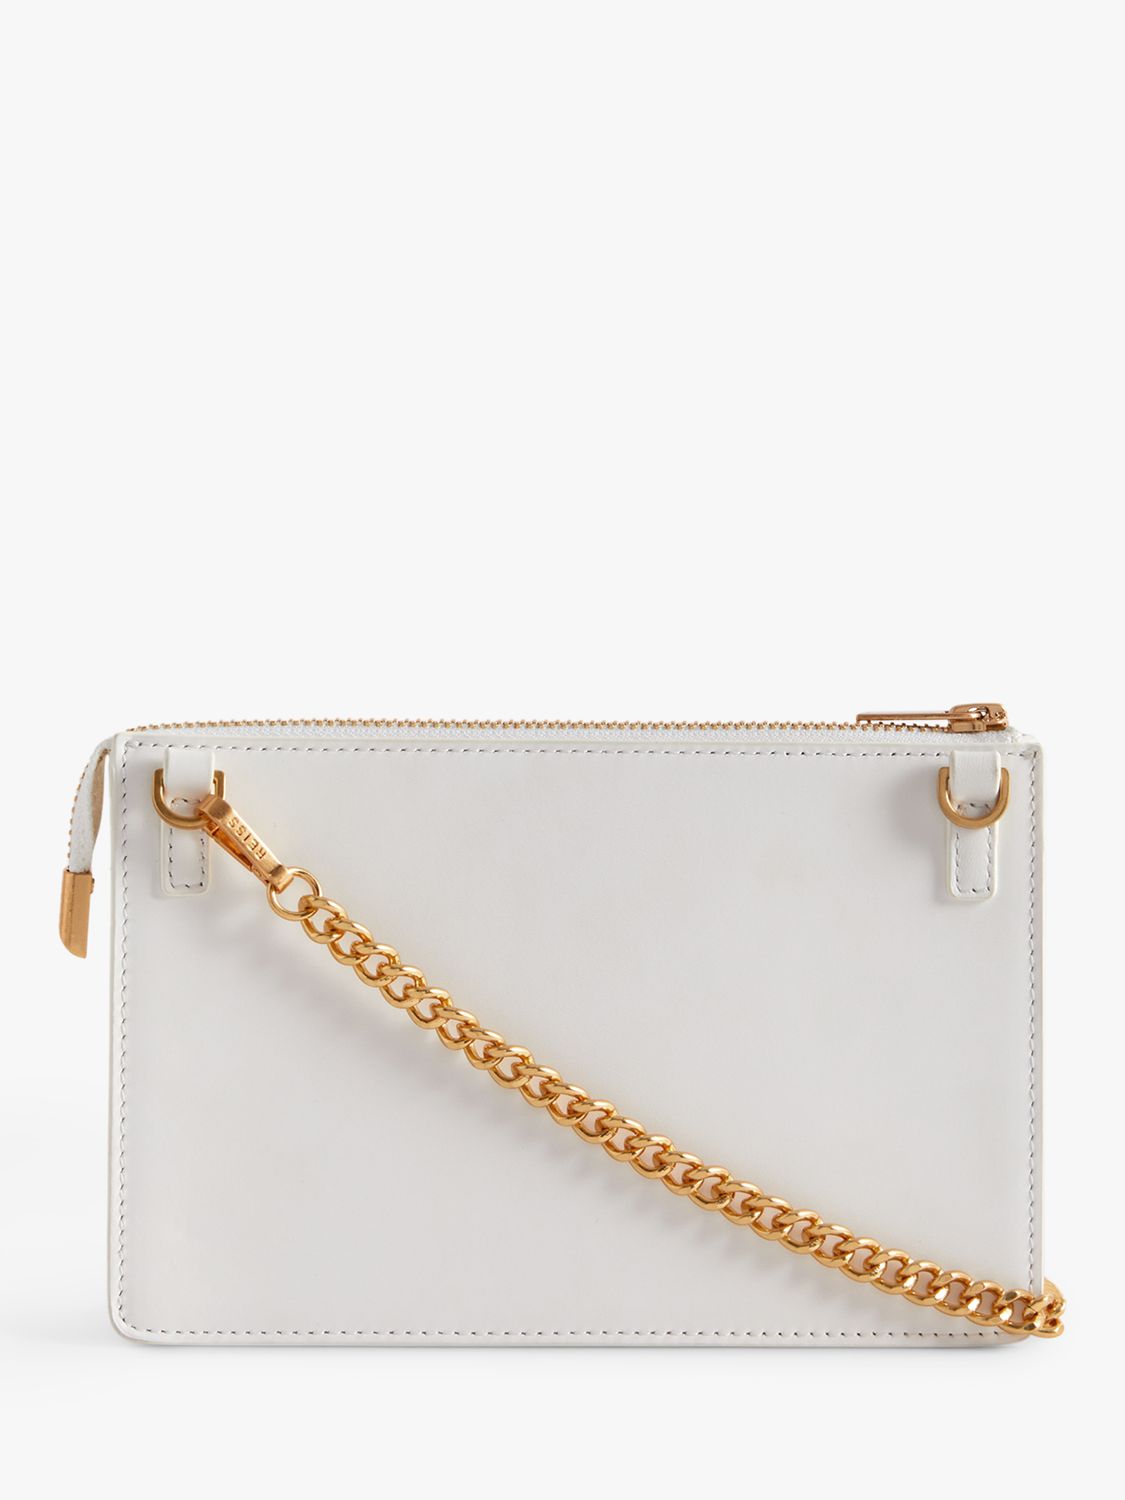 Reiss Picton Leather & Raffia Chain Strap Crossbody Bag, White/Natural ...